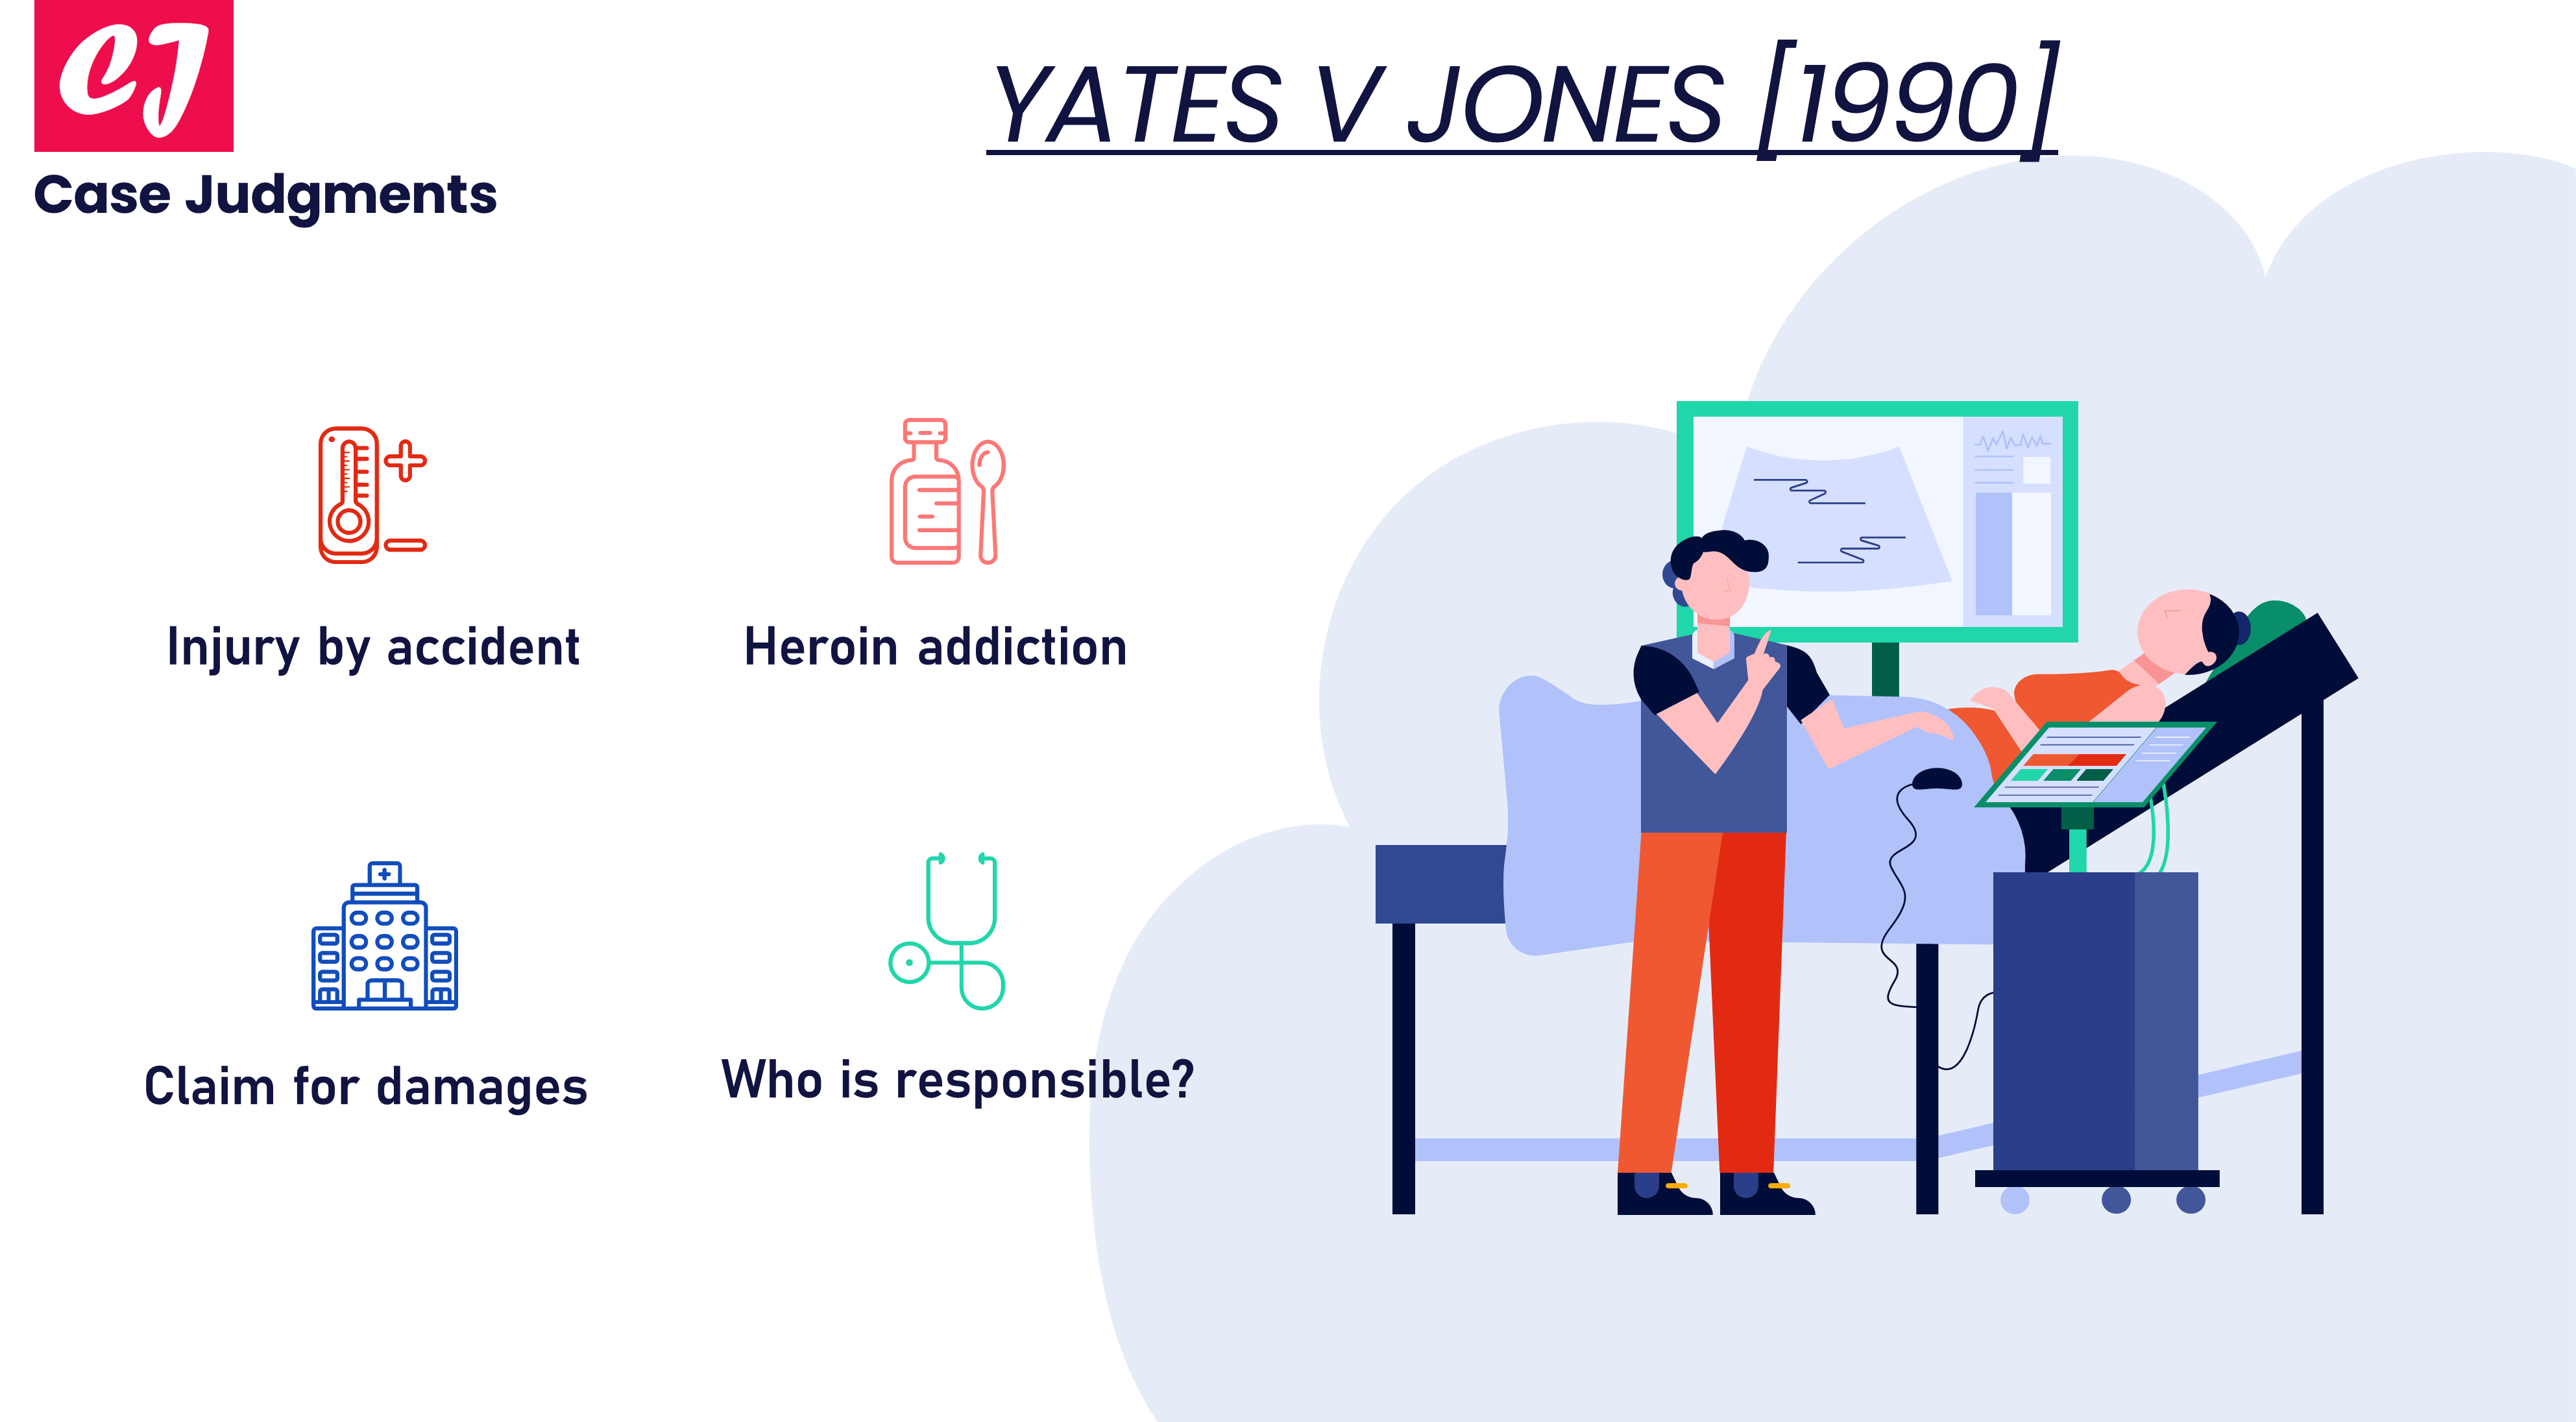 Yates v Jones